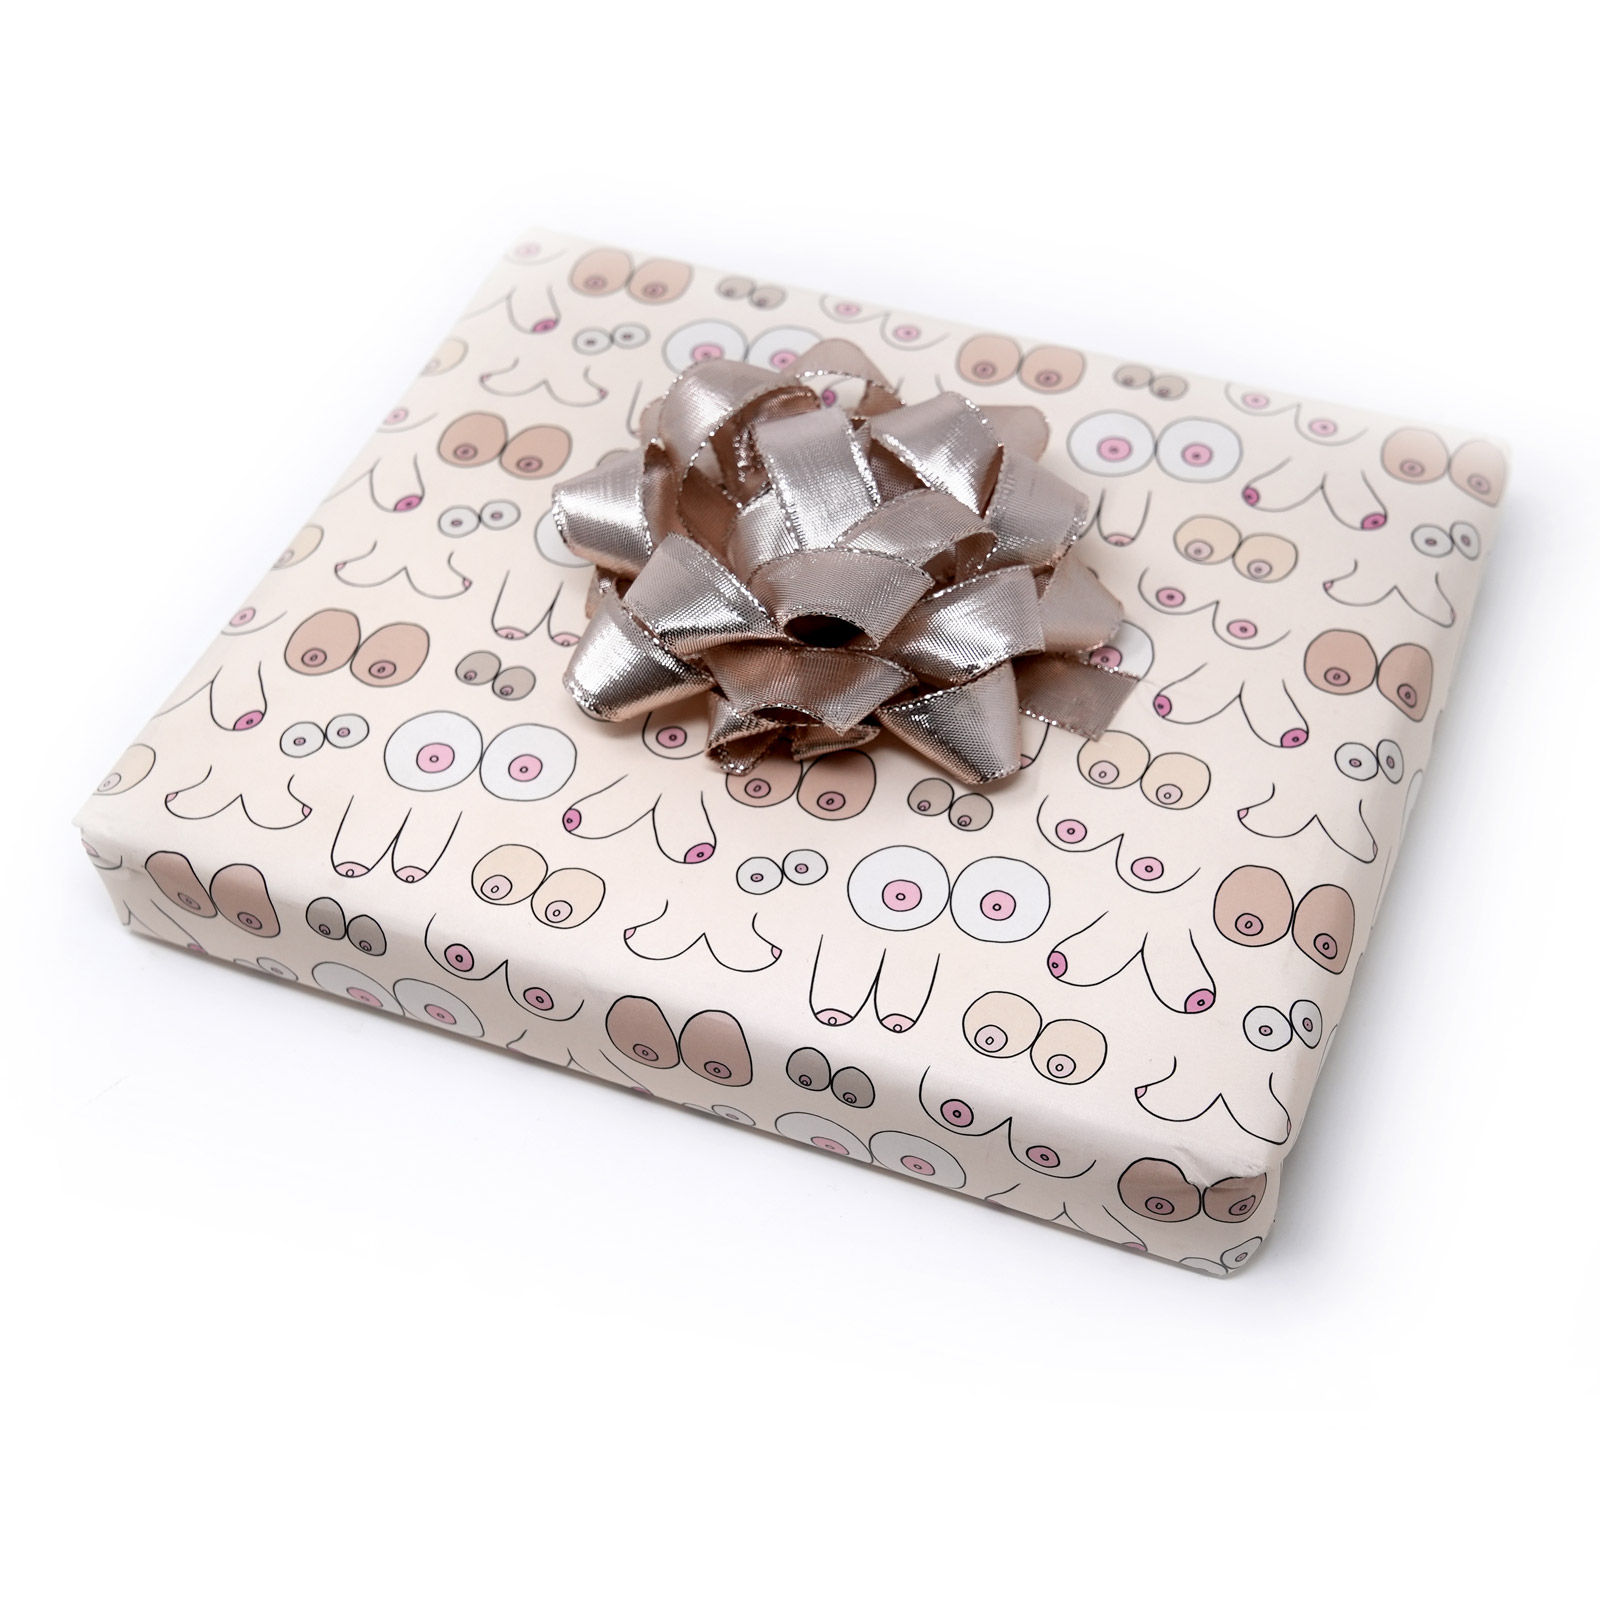 Boob - Gift Wrap